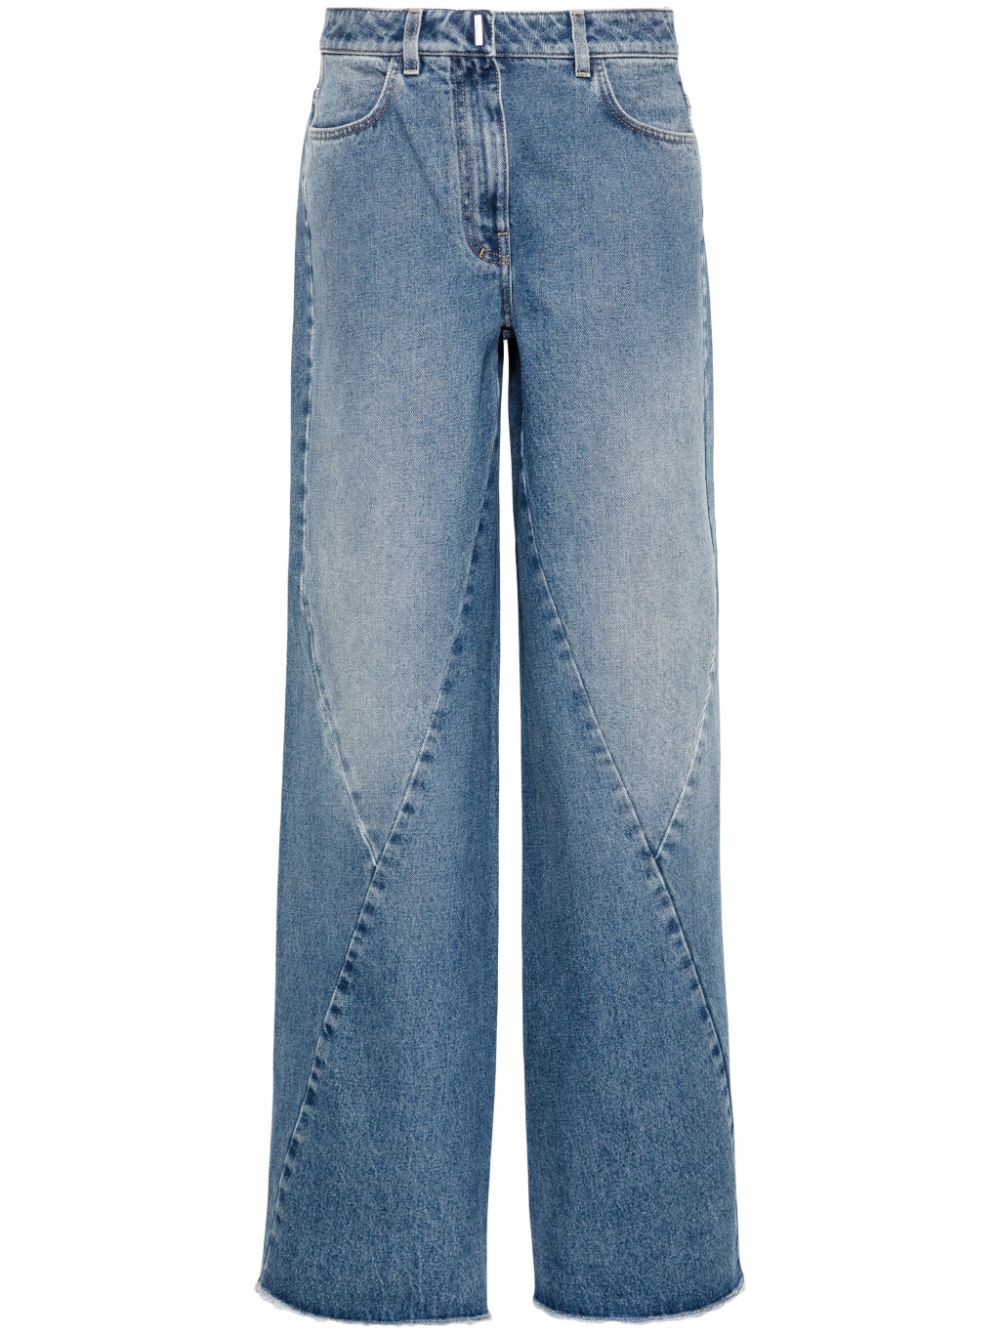 GIVENCHY Wide Leg Denim Jeans for Women in Medium Blue